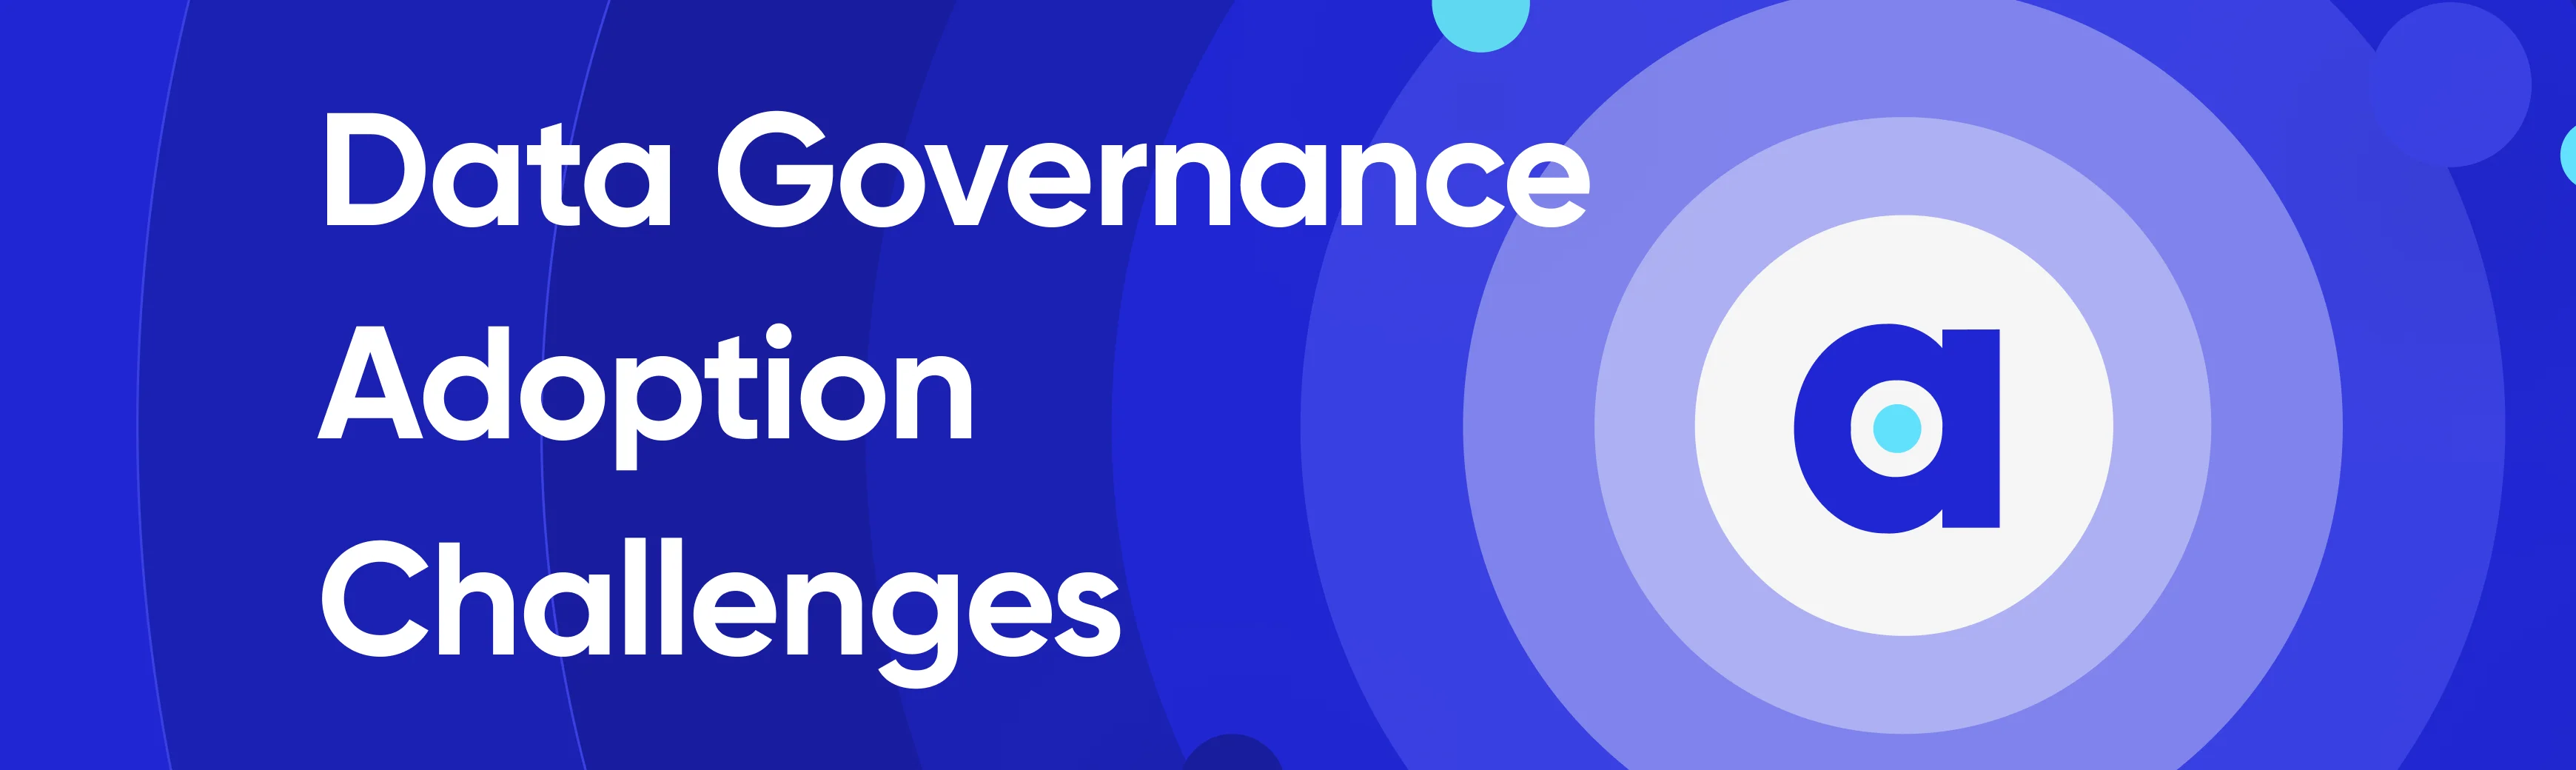 Data governance adoption challenges